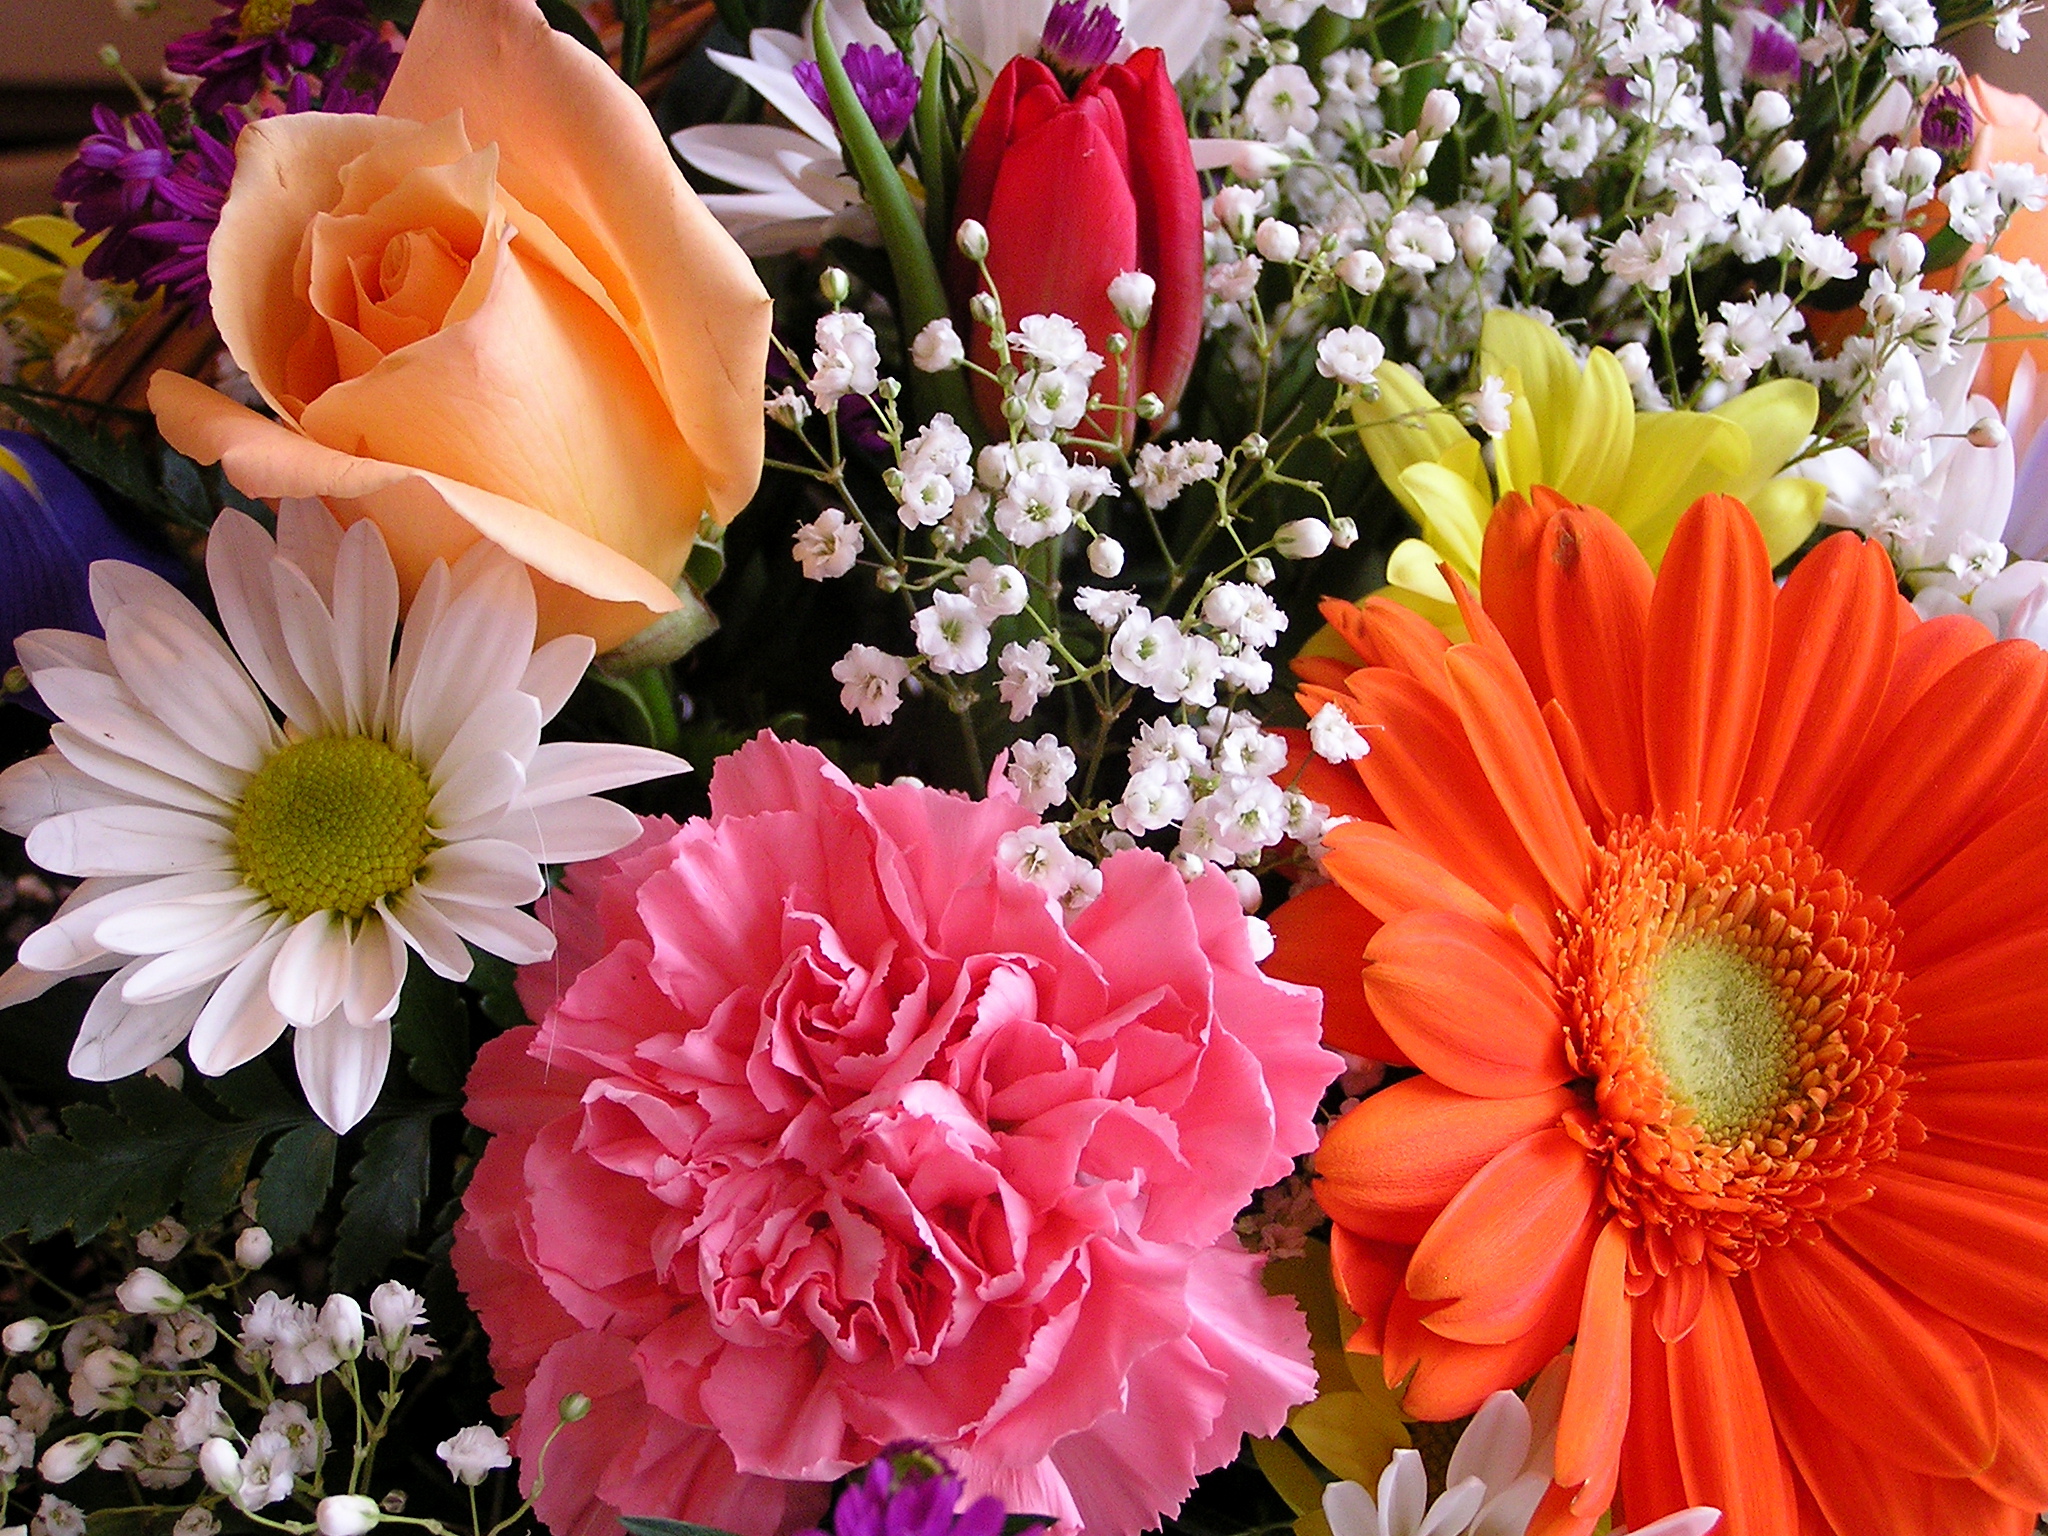 File:Birthday bouquet.jpg - Wikimedia Commons